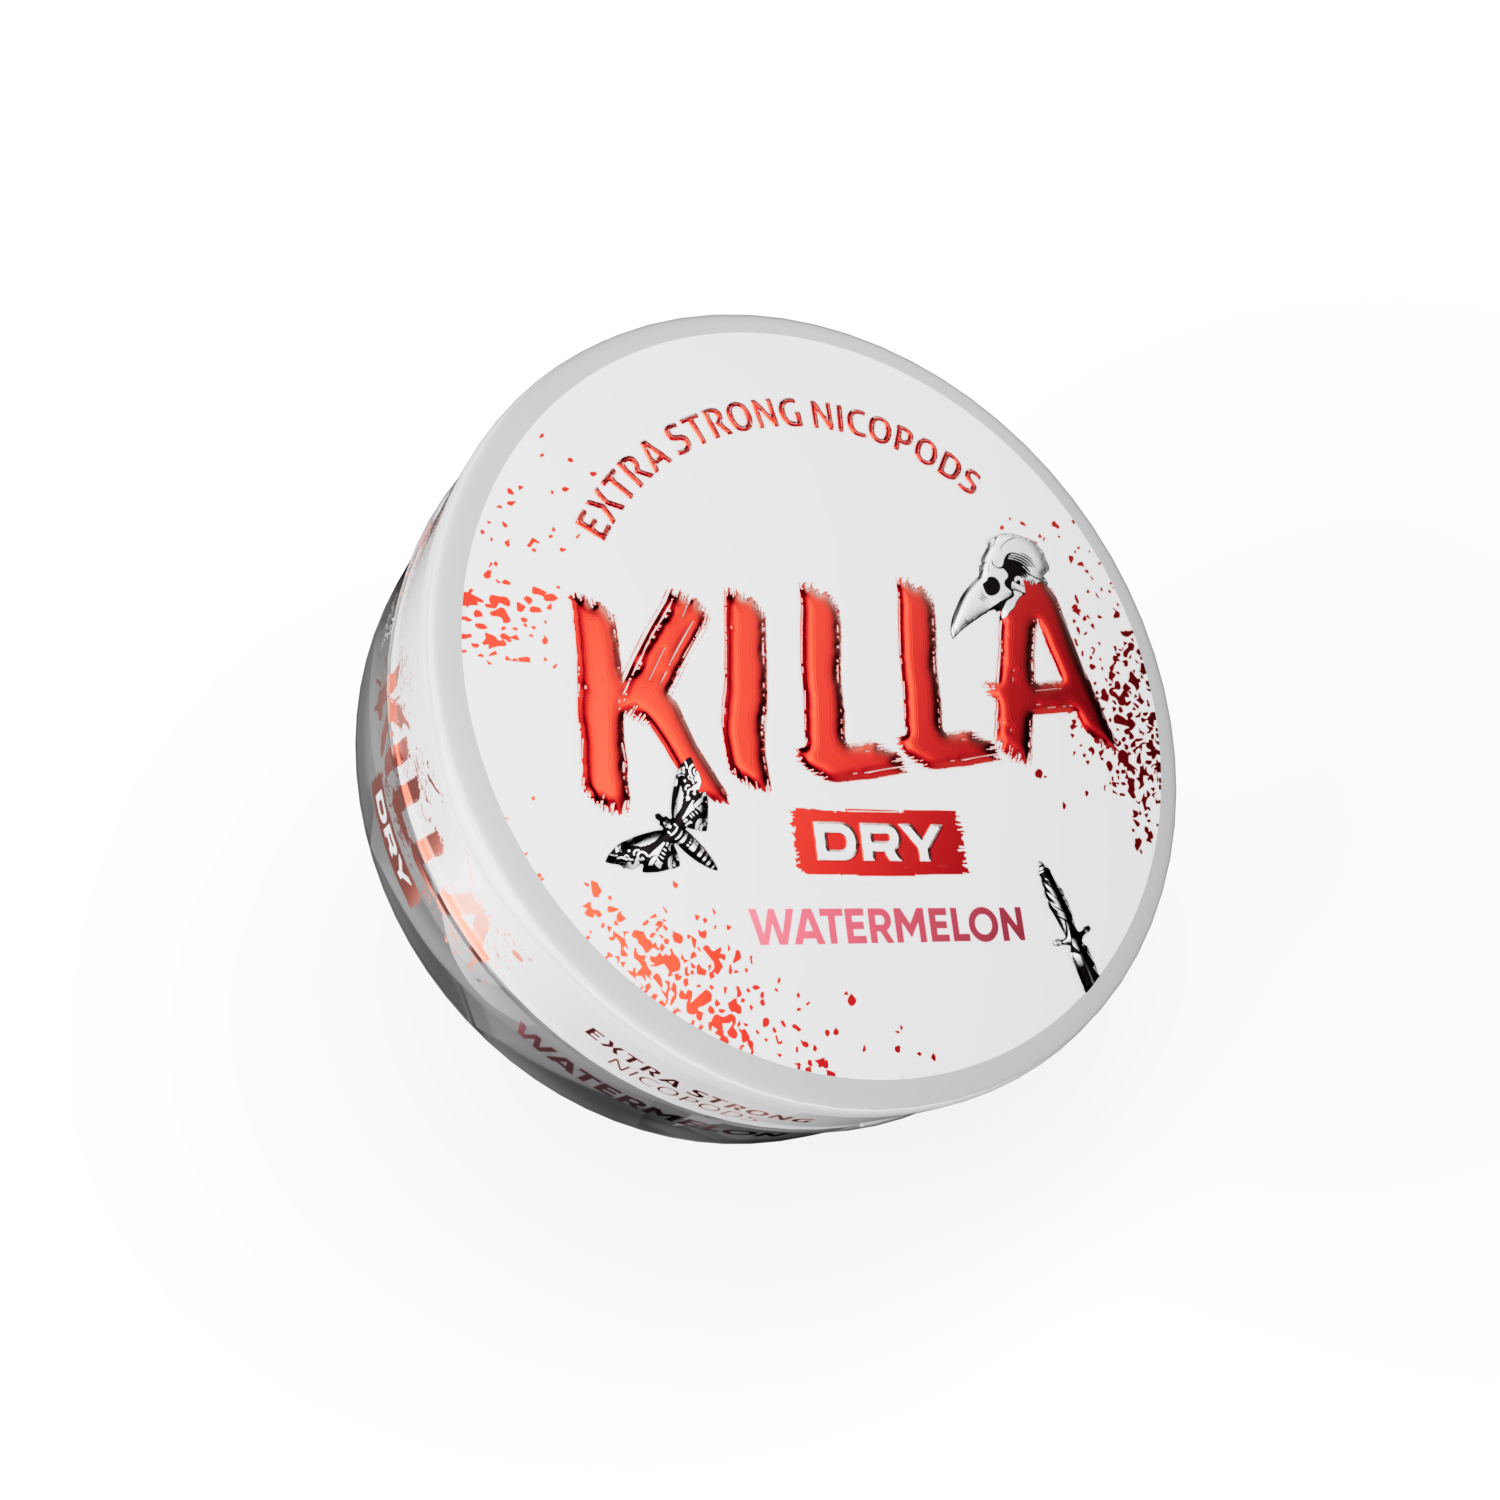 Killa_Dry_Watermelon_2_uus